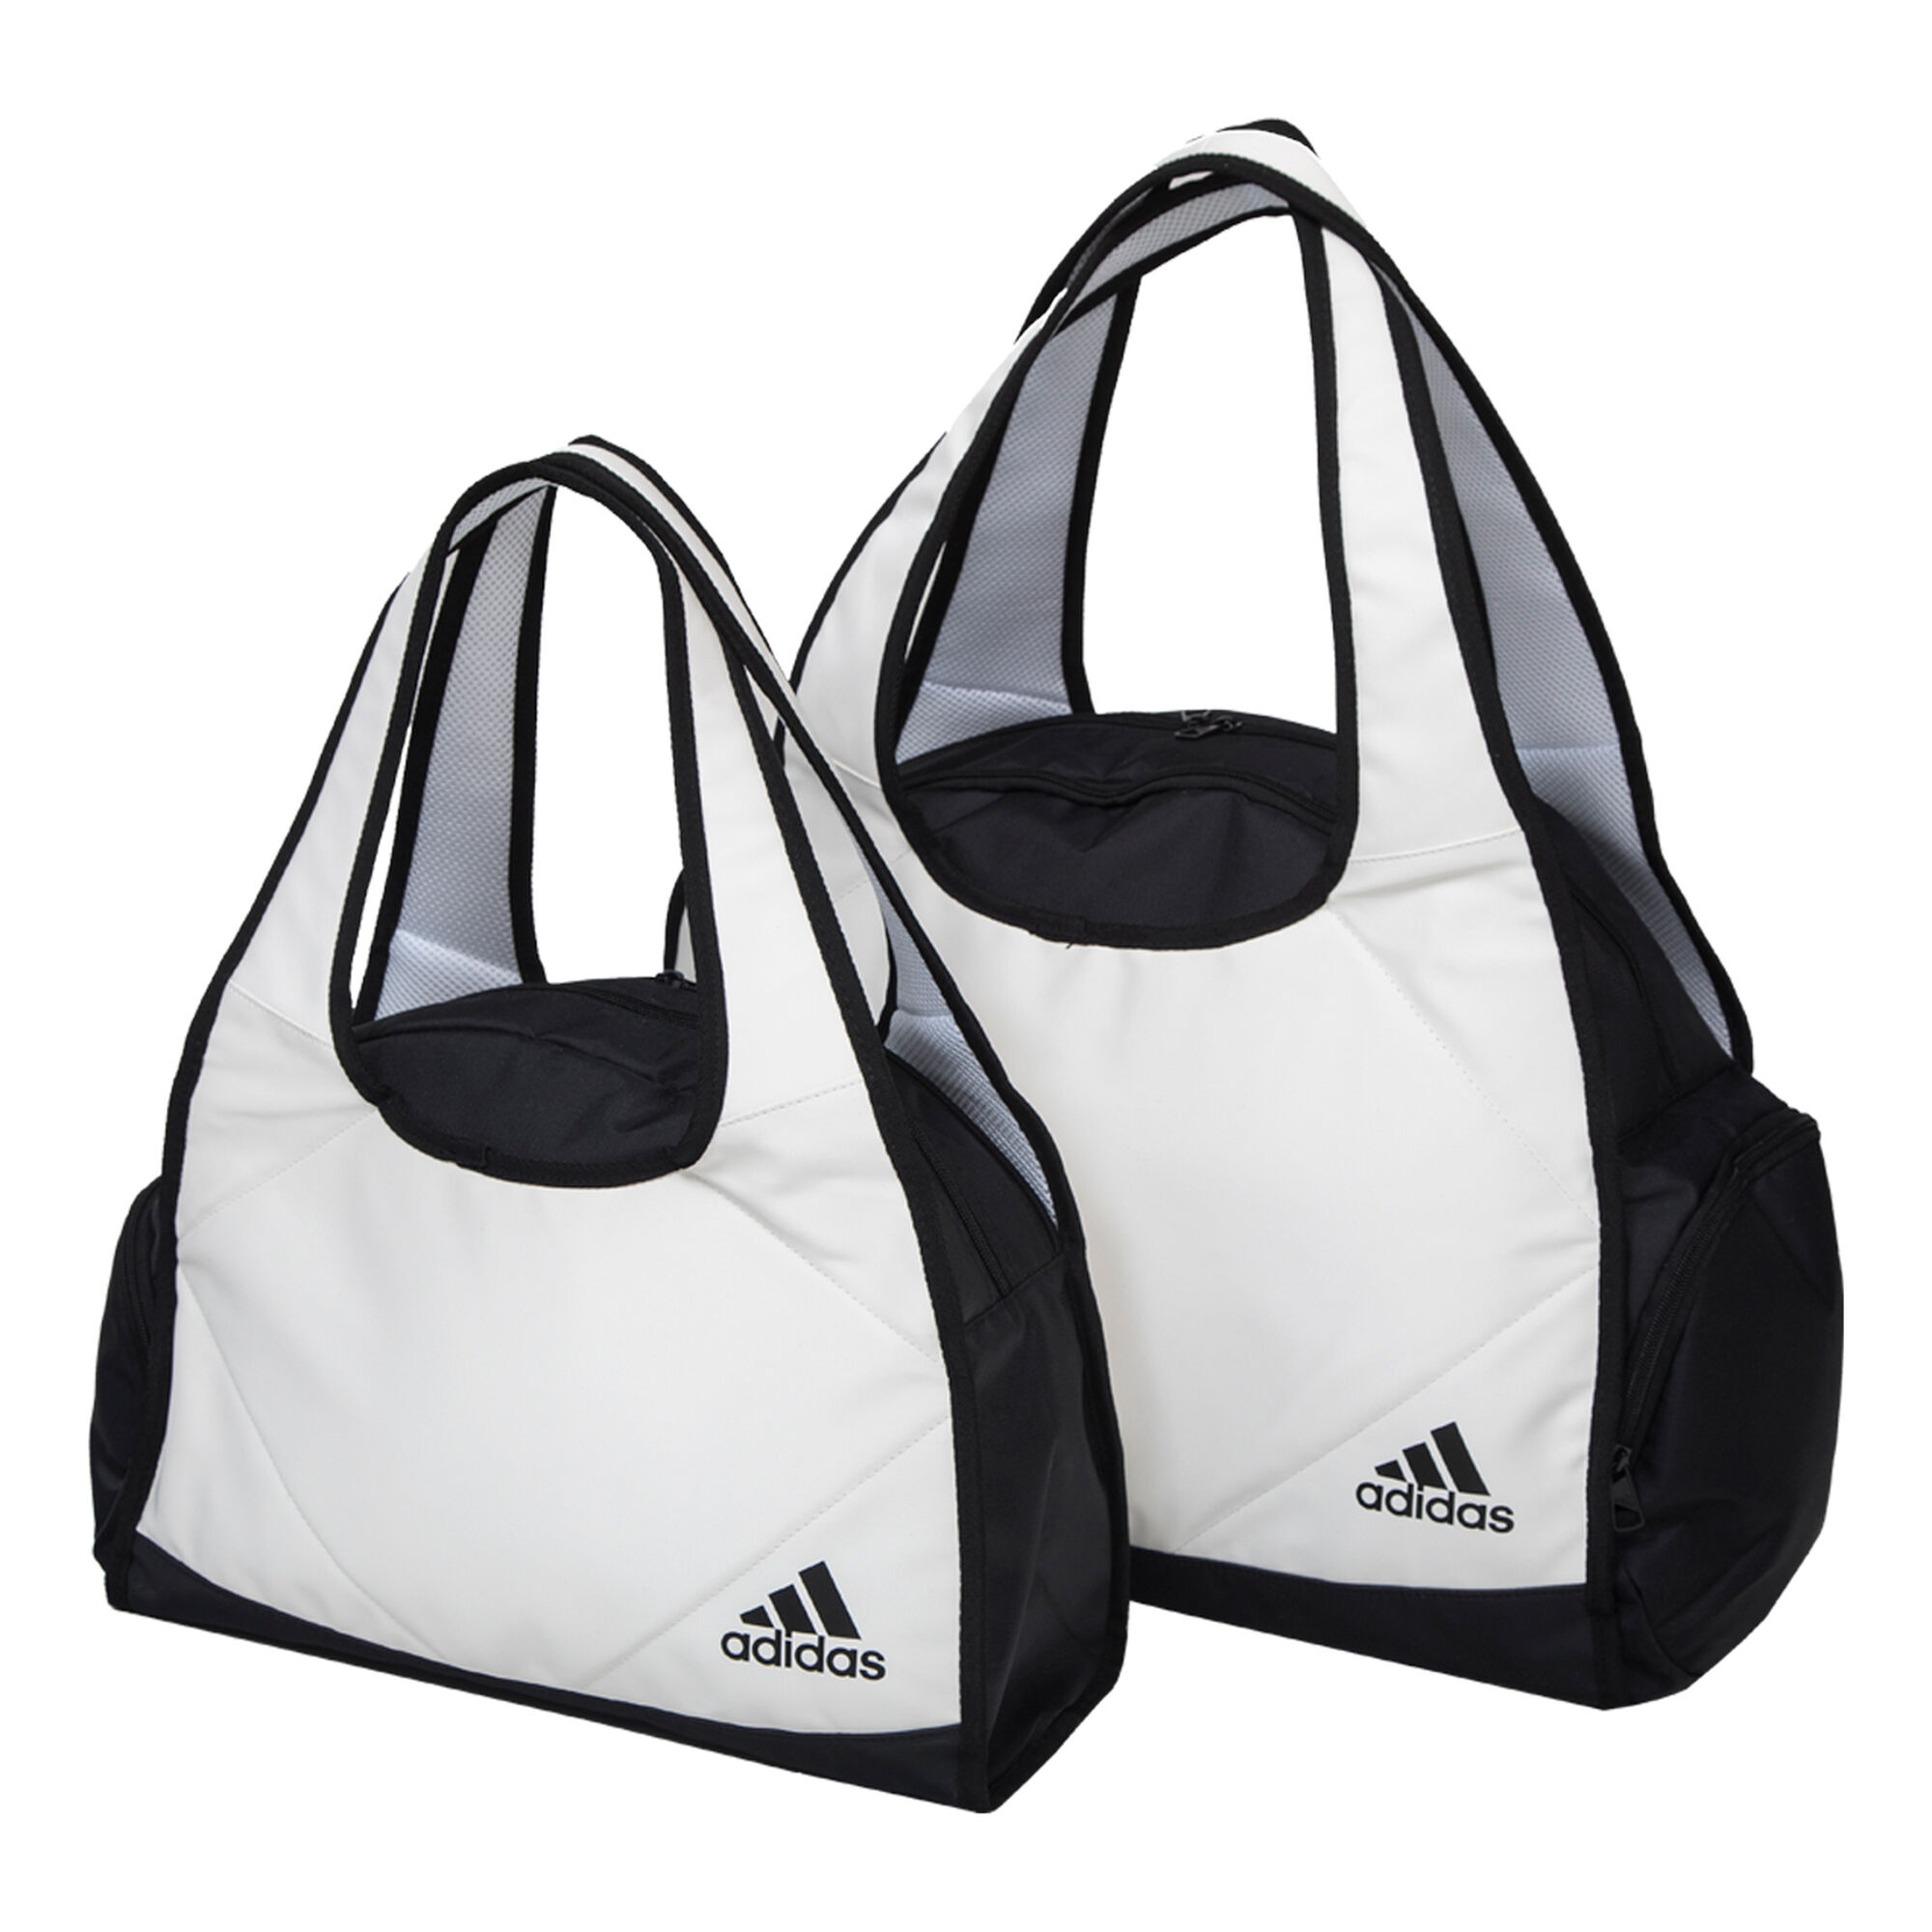 adidas Bag 2.0 Bolsa Deporte Pádel - Blanco, Negro online | Tennis-Point